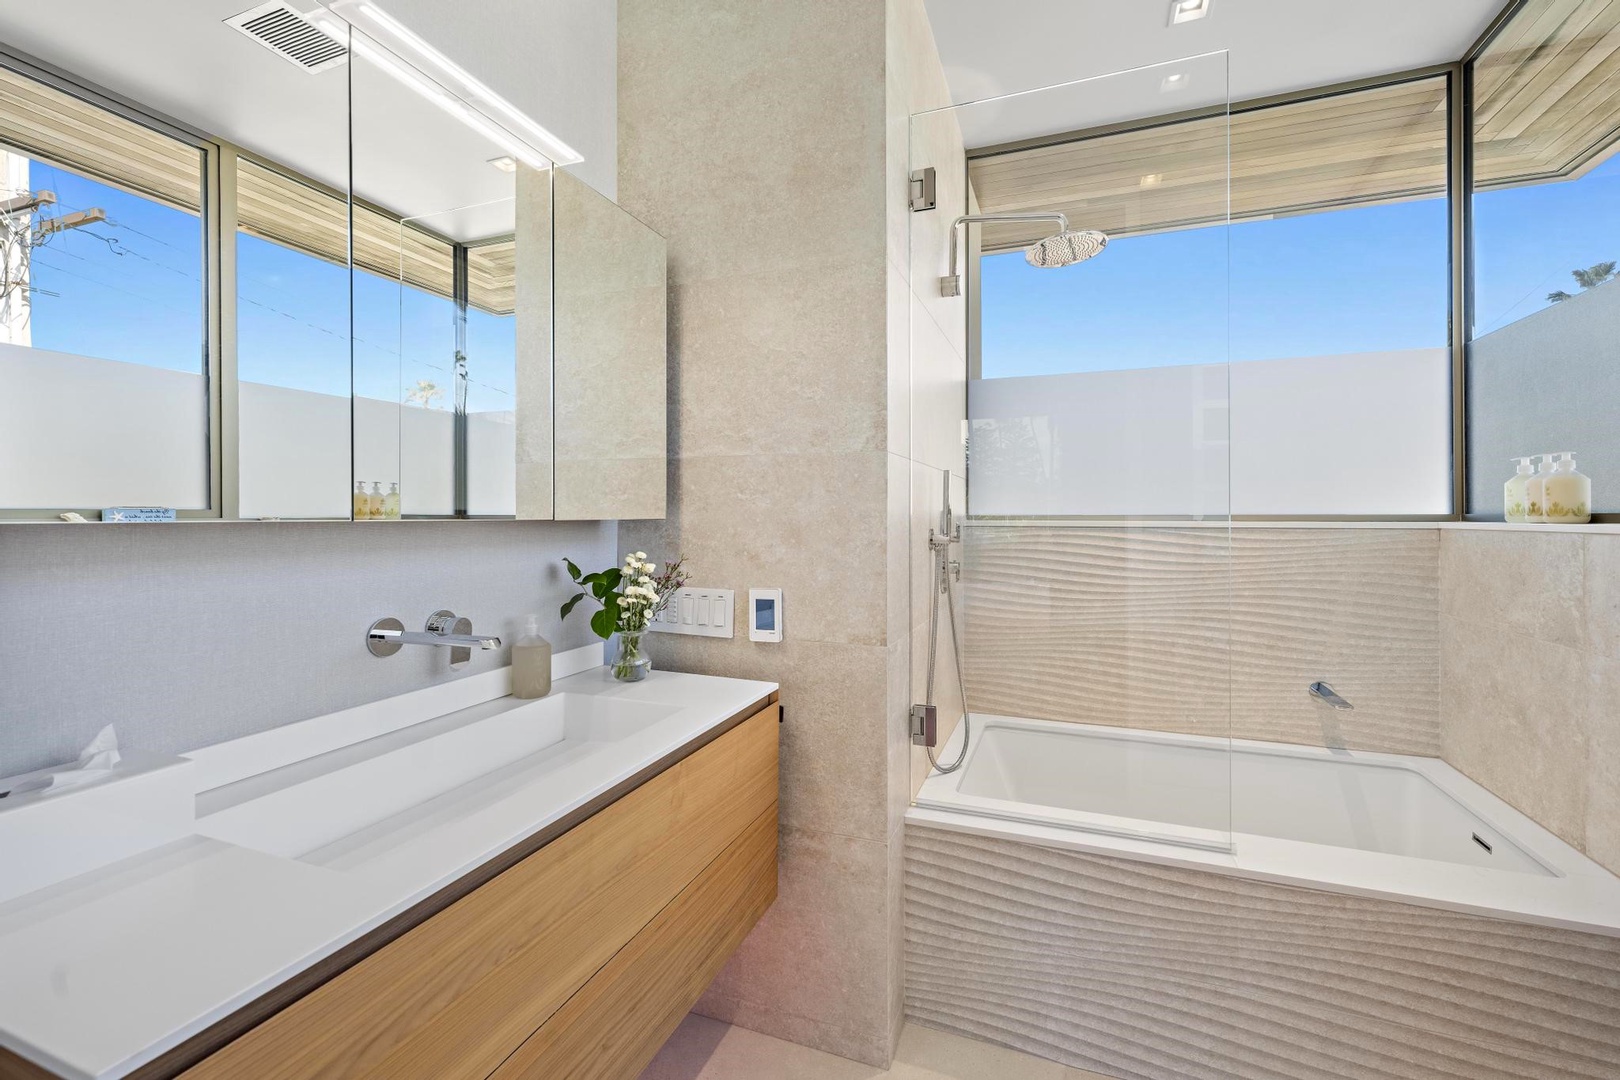 Garden Suite bathroom with tub/shower